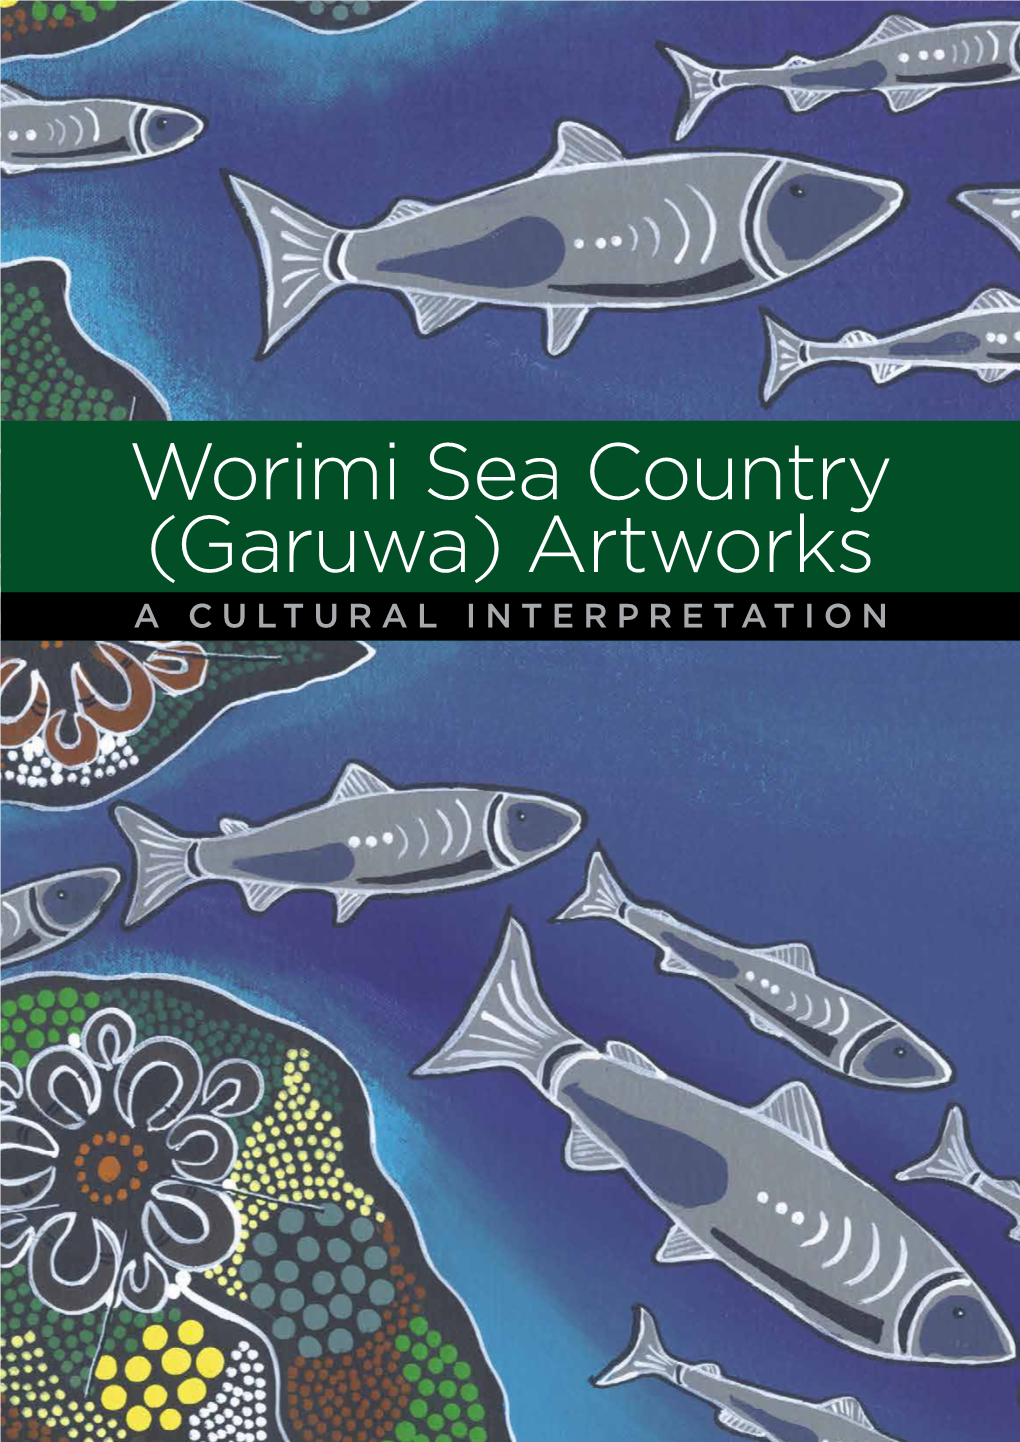 Worimi Sea Country (Garuwa) Artworks a CULTURAL INTERPRETATION ABOUT the ARTIST Melissa Lilley